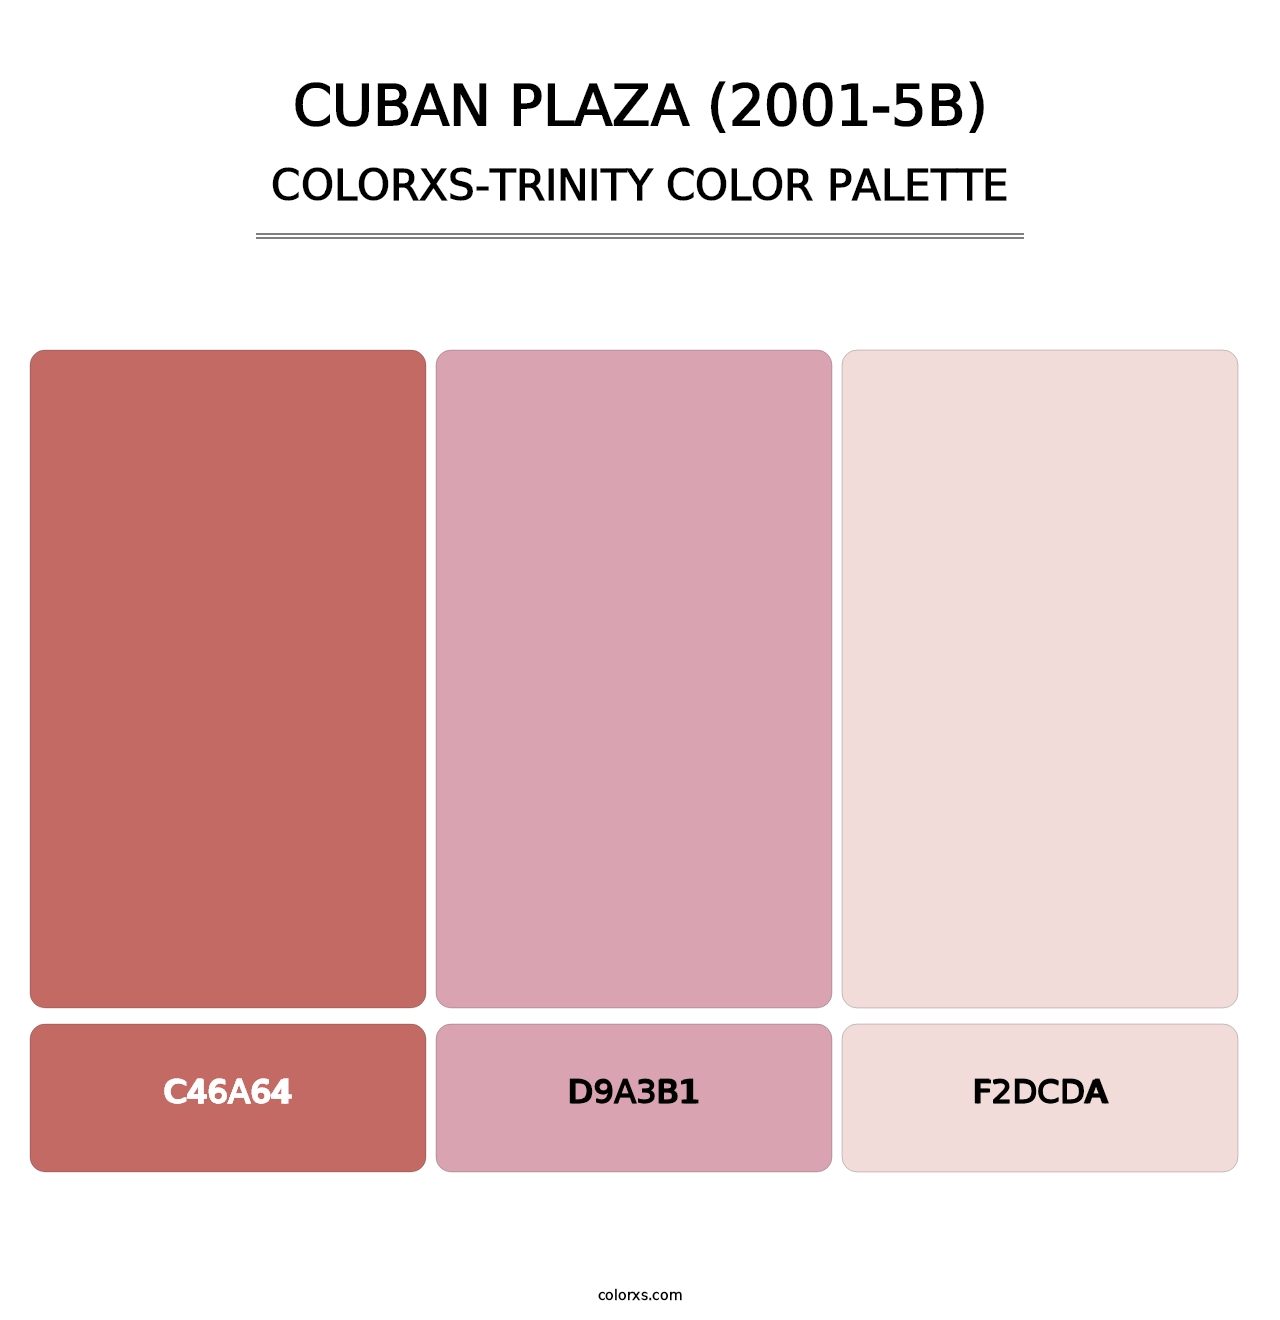 Cuban Plaza (2001-5B) - Colorxs Trinity Palette